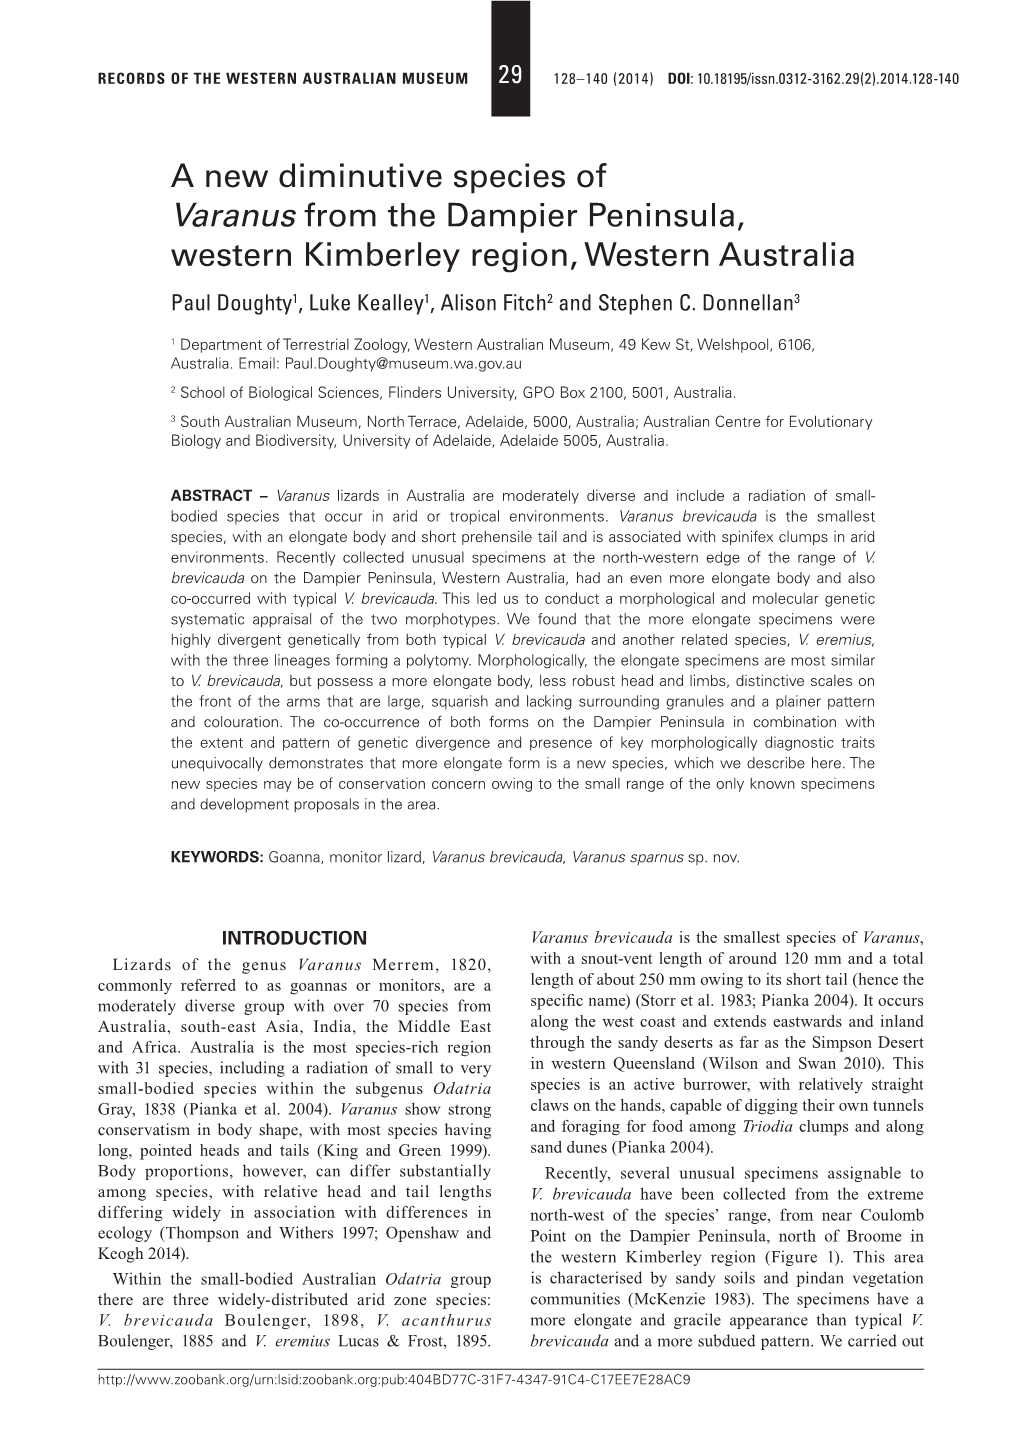 A New Diminutive Species of Varanus from the Dampier Peninsula, Western Kimberley Region, Western Australia Paul Doughty1, Luke Kealley1, Alison Fitch2 and Stephen C